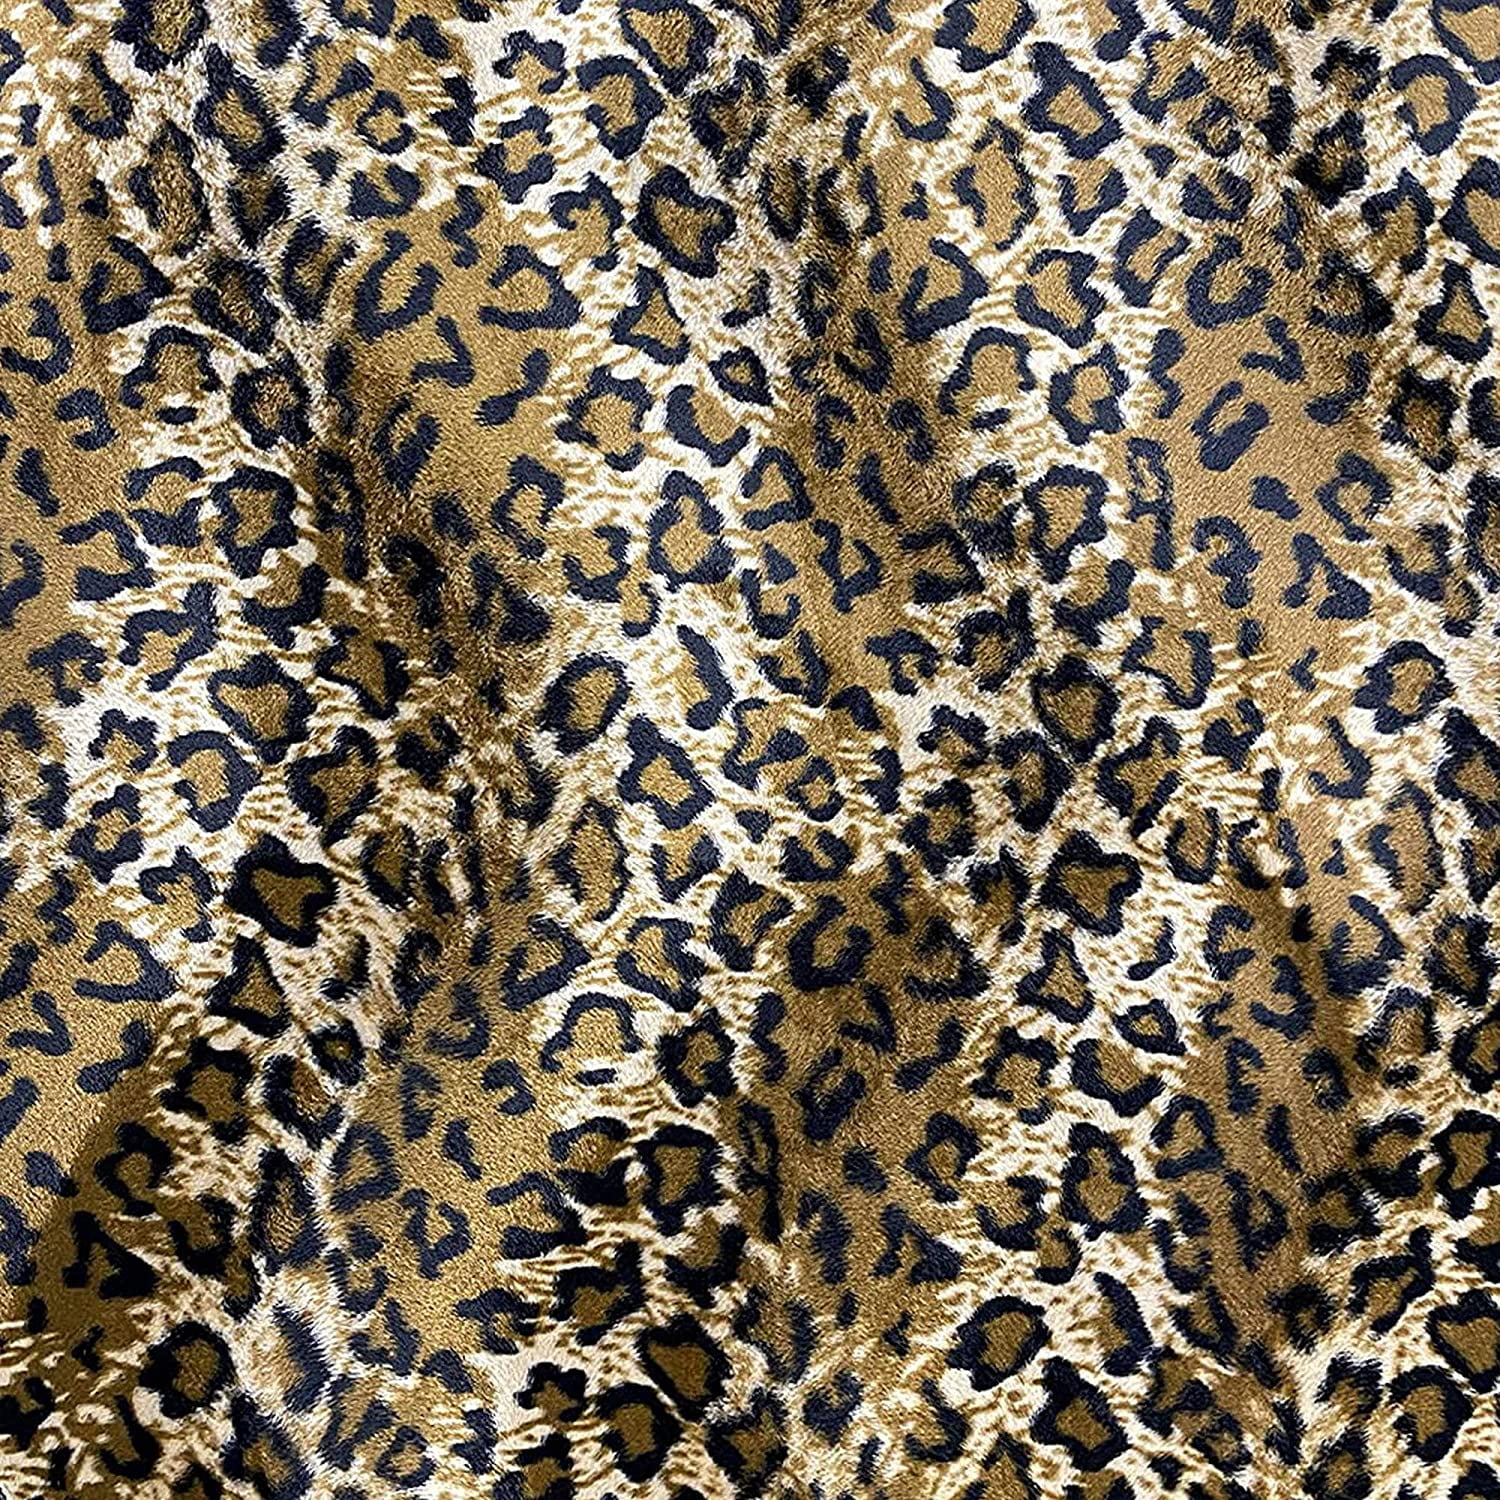 FabricLA Shaggy Faux Fur Fabric by The Yard - 72 x 60 Inches (180 cm x 150